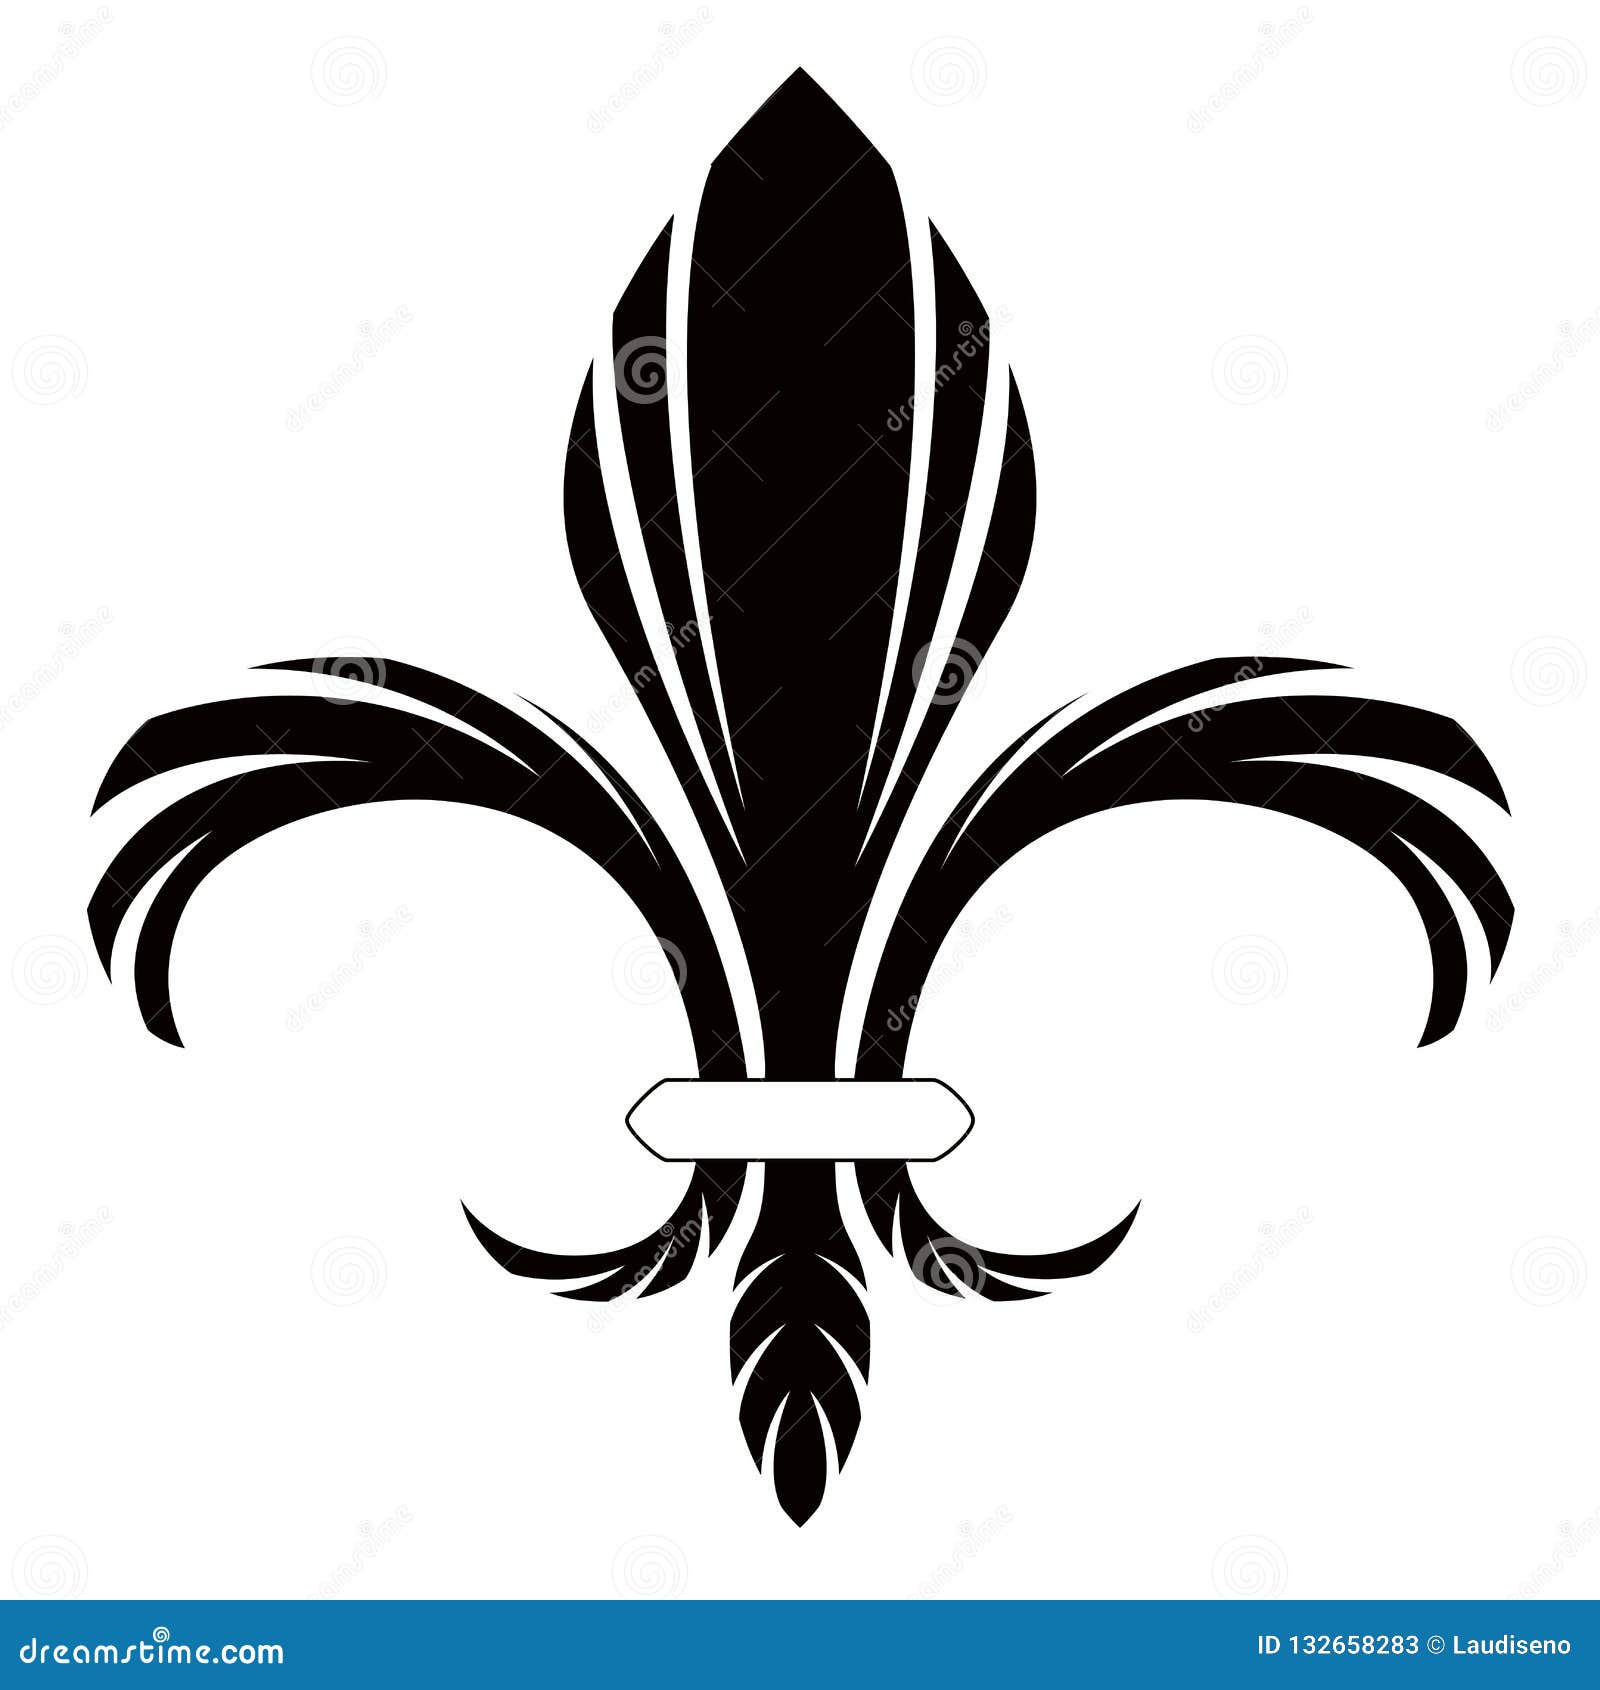 Fleur de lys symbol stock vector. Illustration of emblem - 132658283